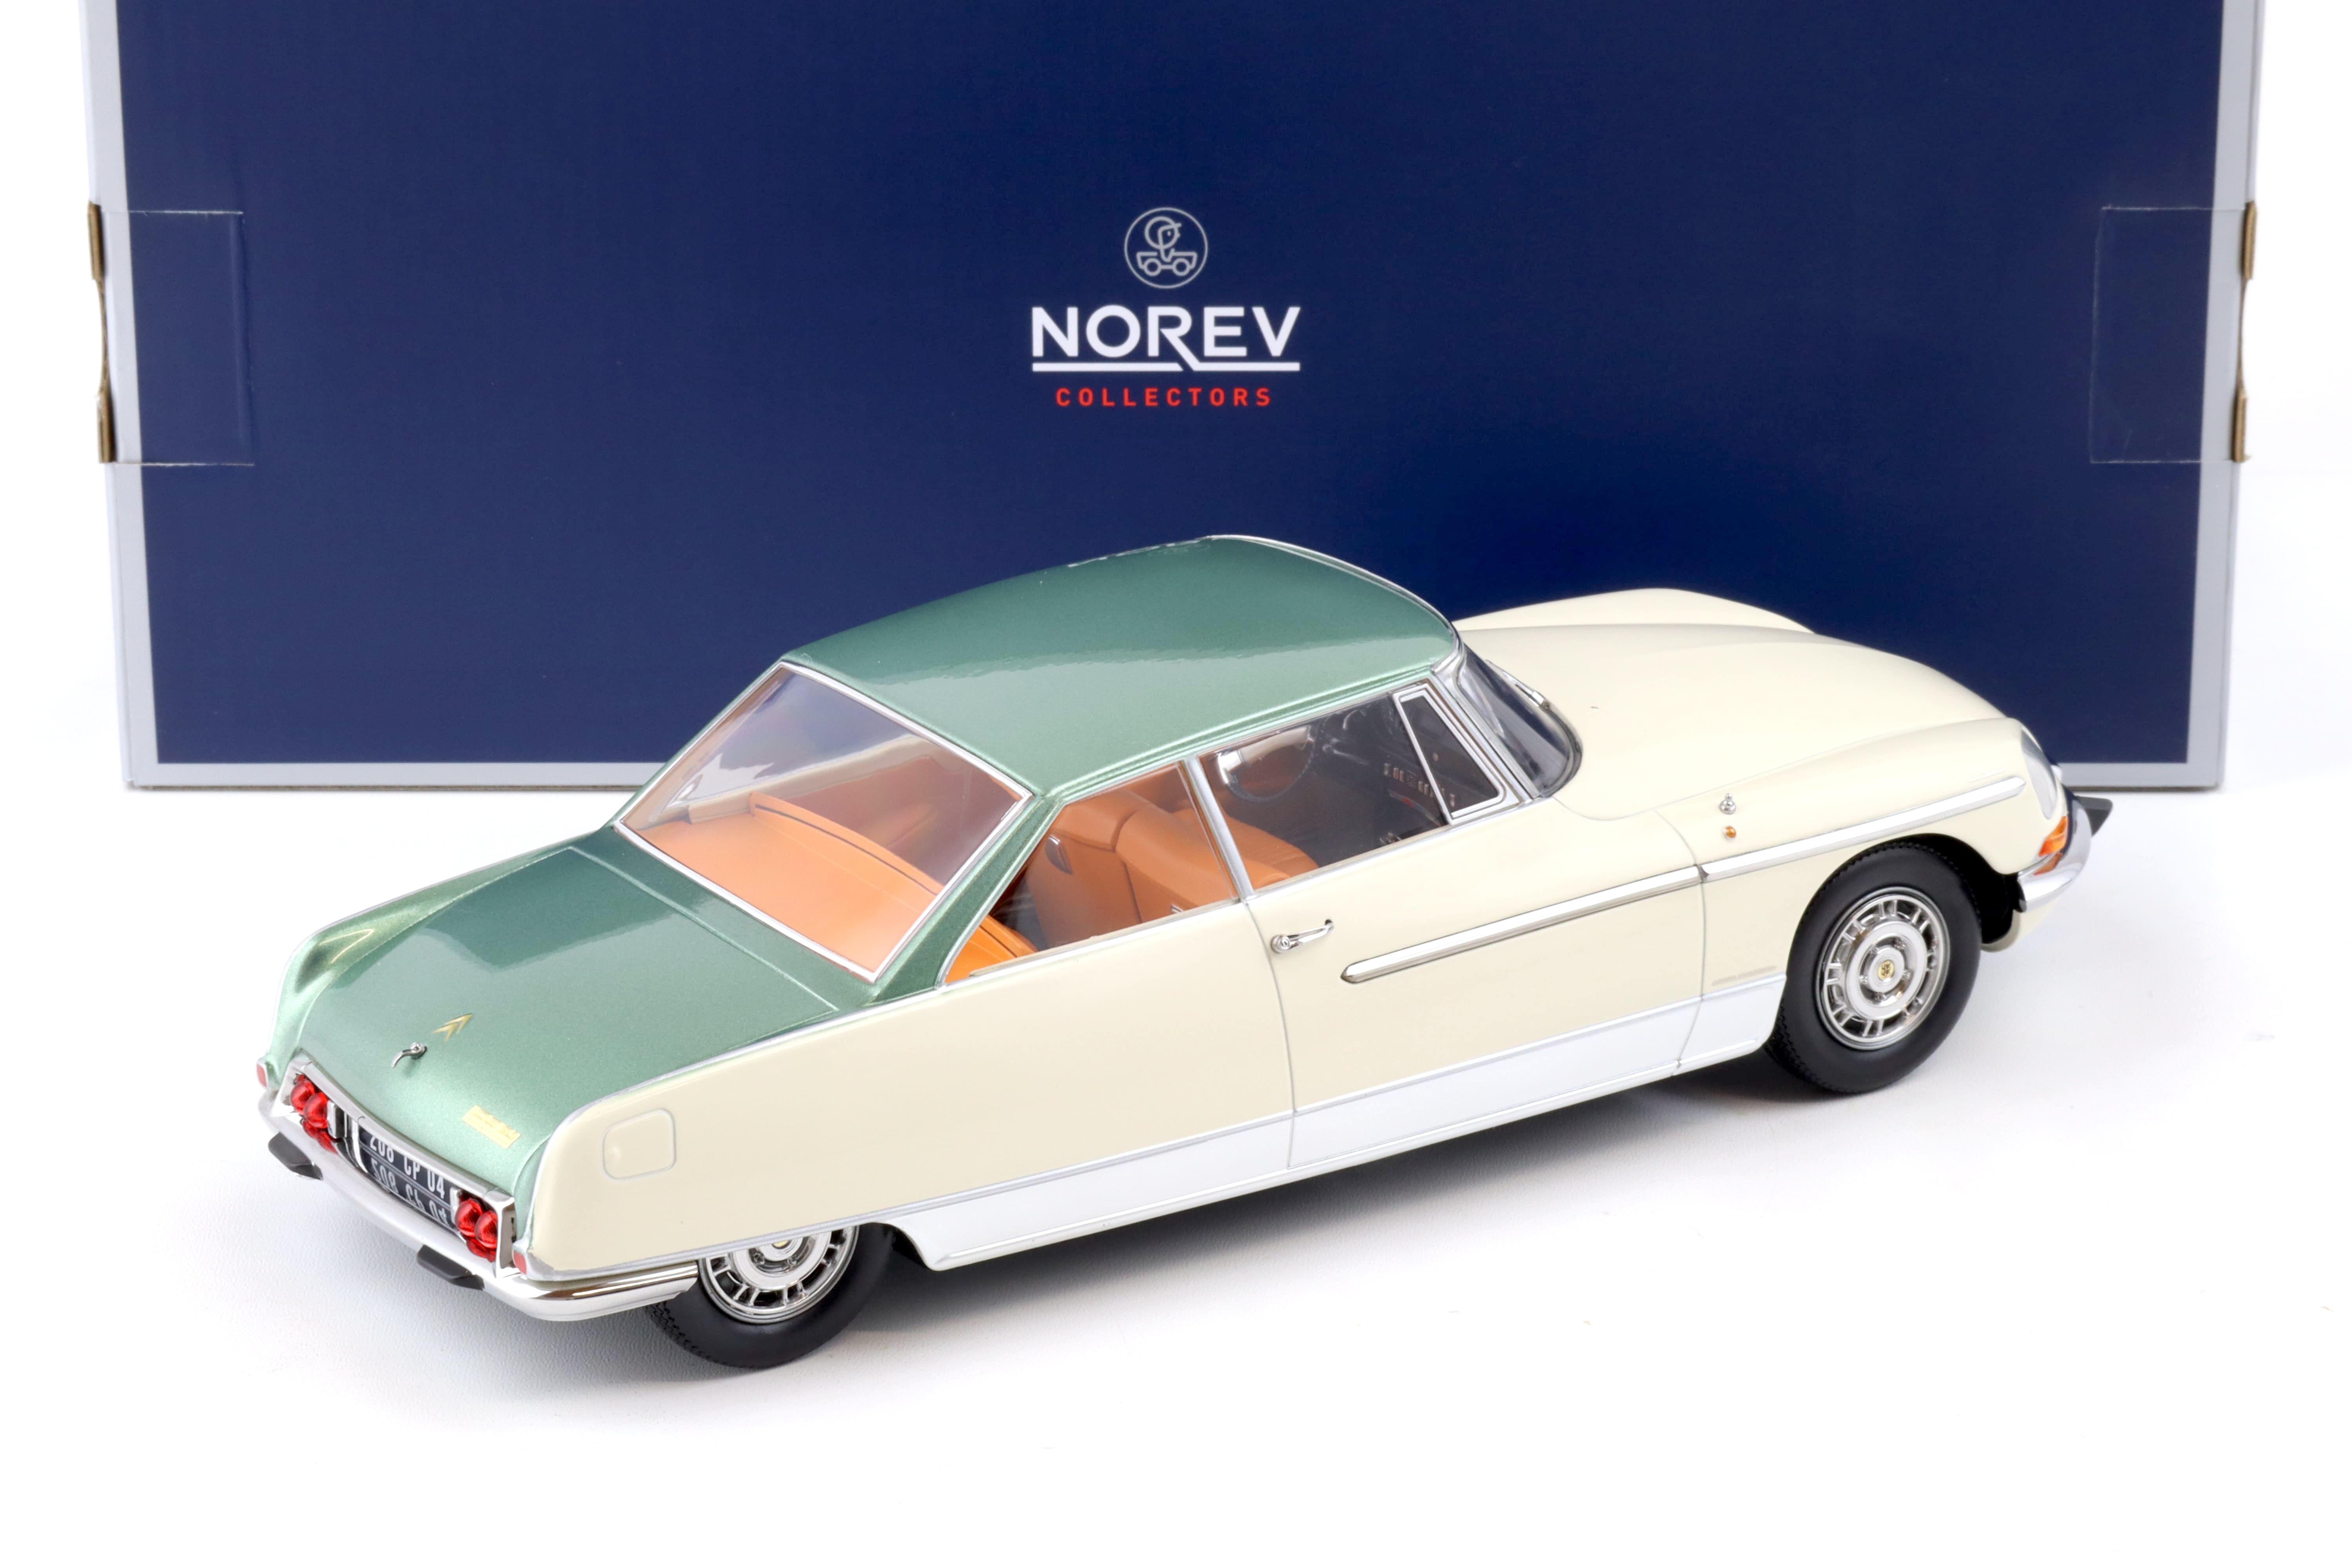 1:18 Norev Citroen DS 21 Le Leman 1968 Ivory & green metallic